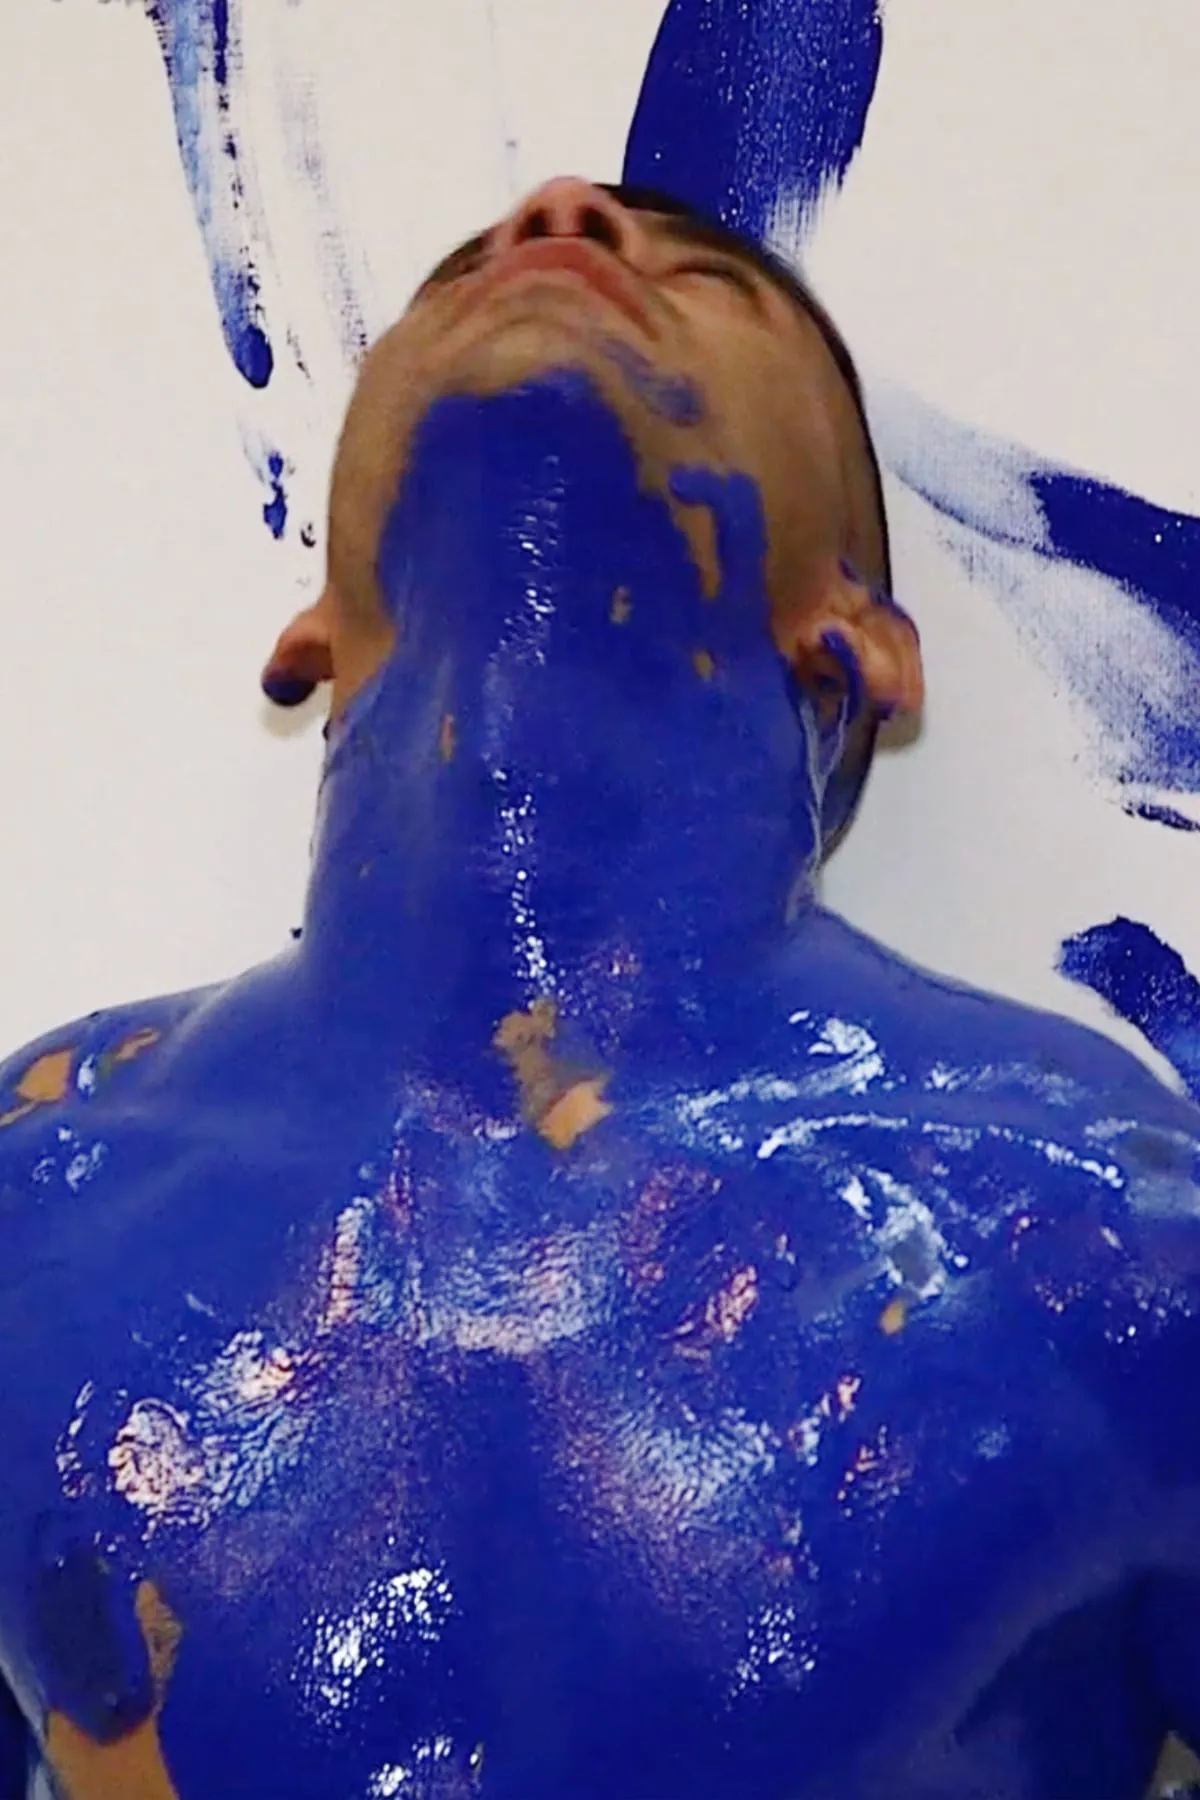 Dancer Nelson Reguera cover on blue paint